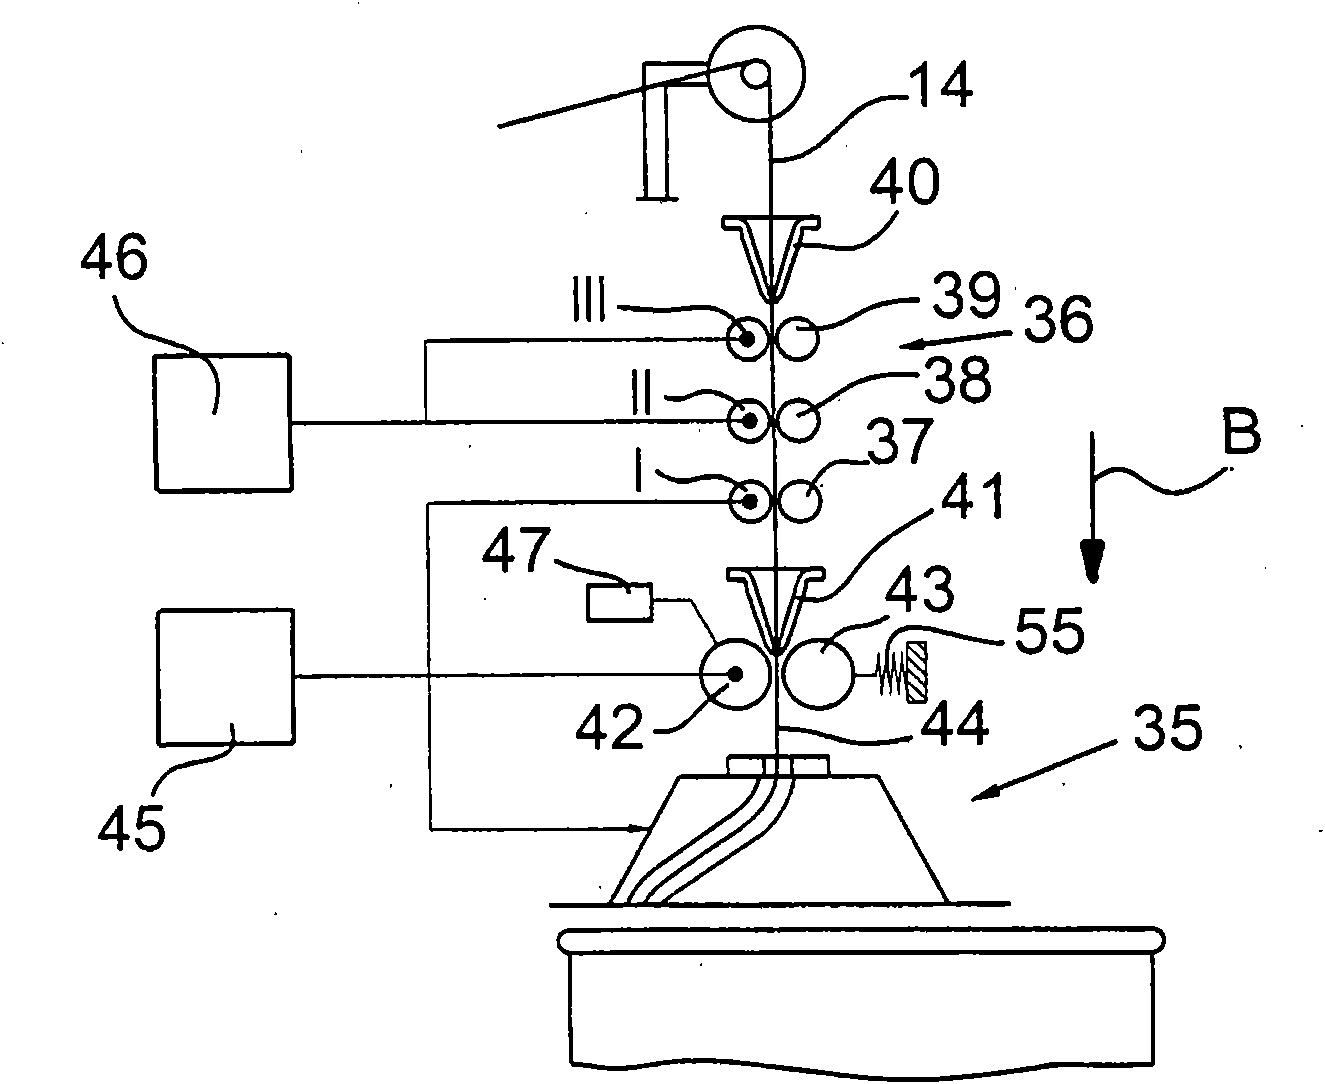 Apparatus used on spinning room preparation machine